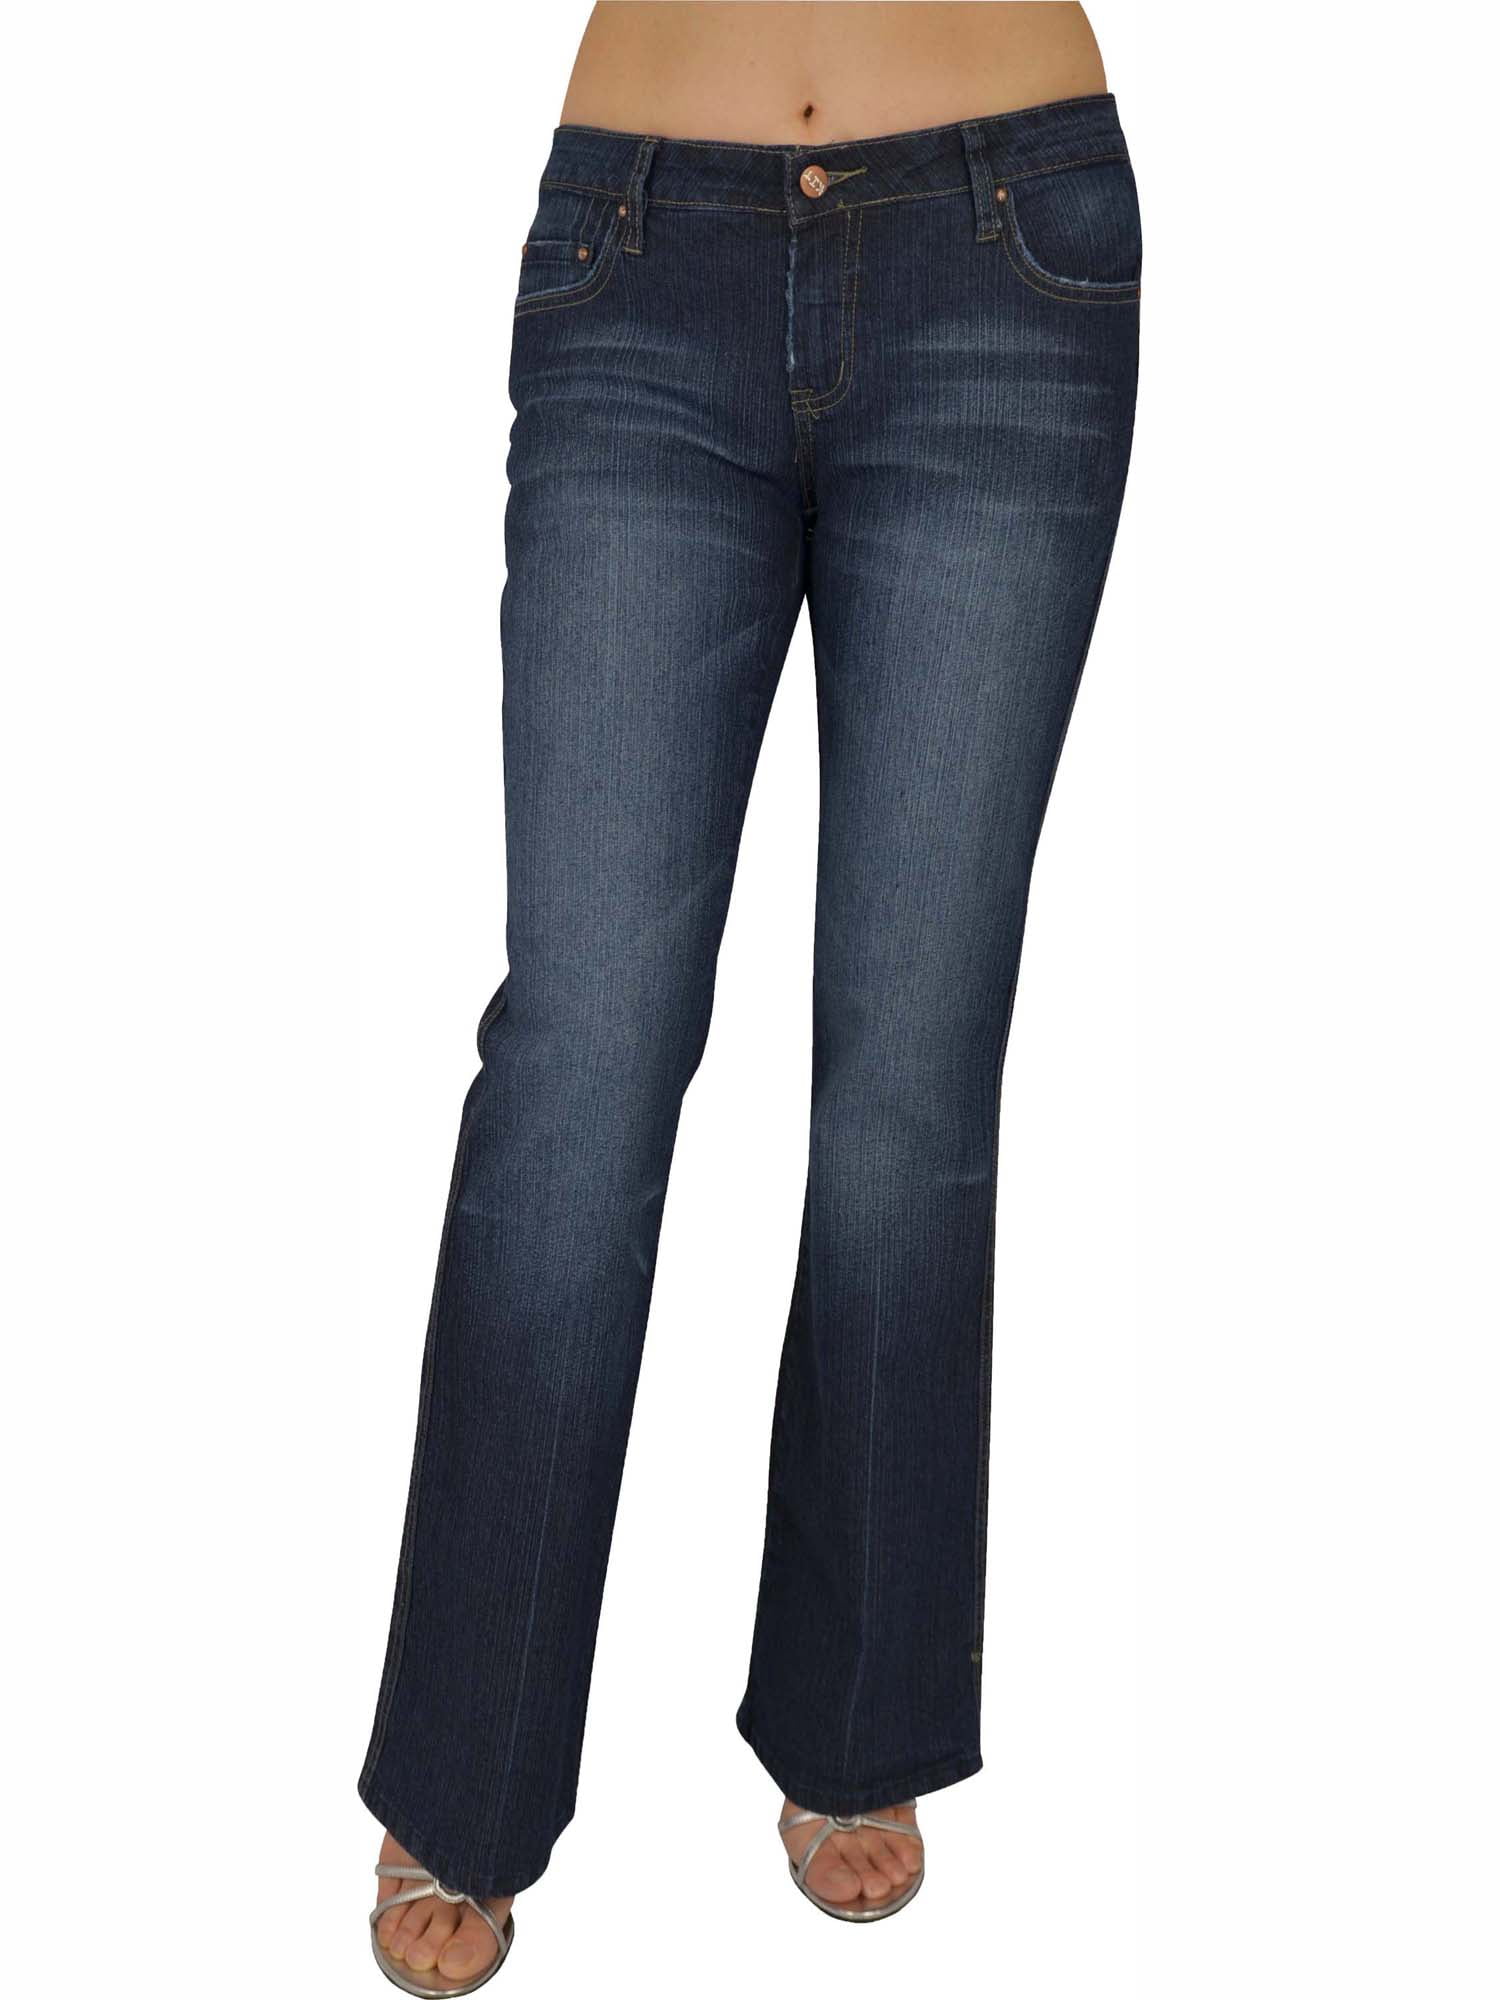 Keep_In_Touch Women's Stretch Jeans 5837-HDSU-15 - Walmart.com